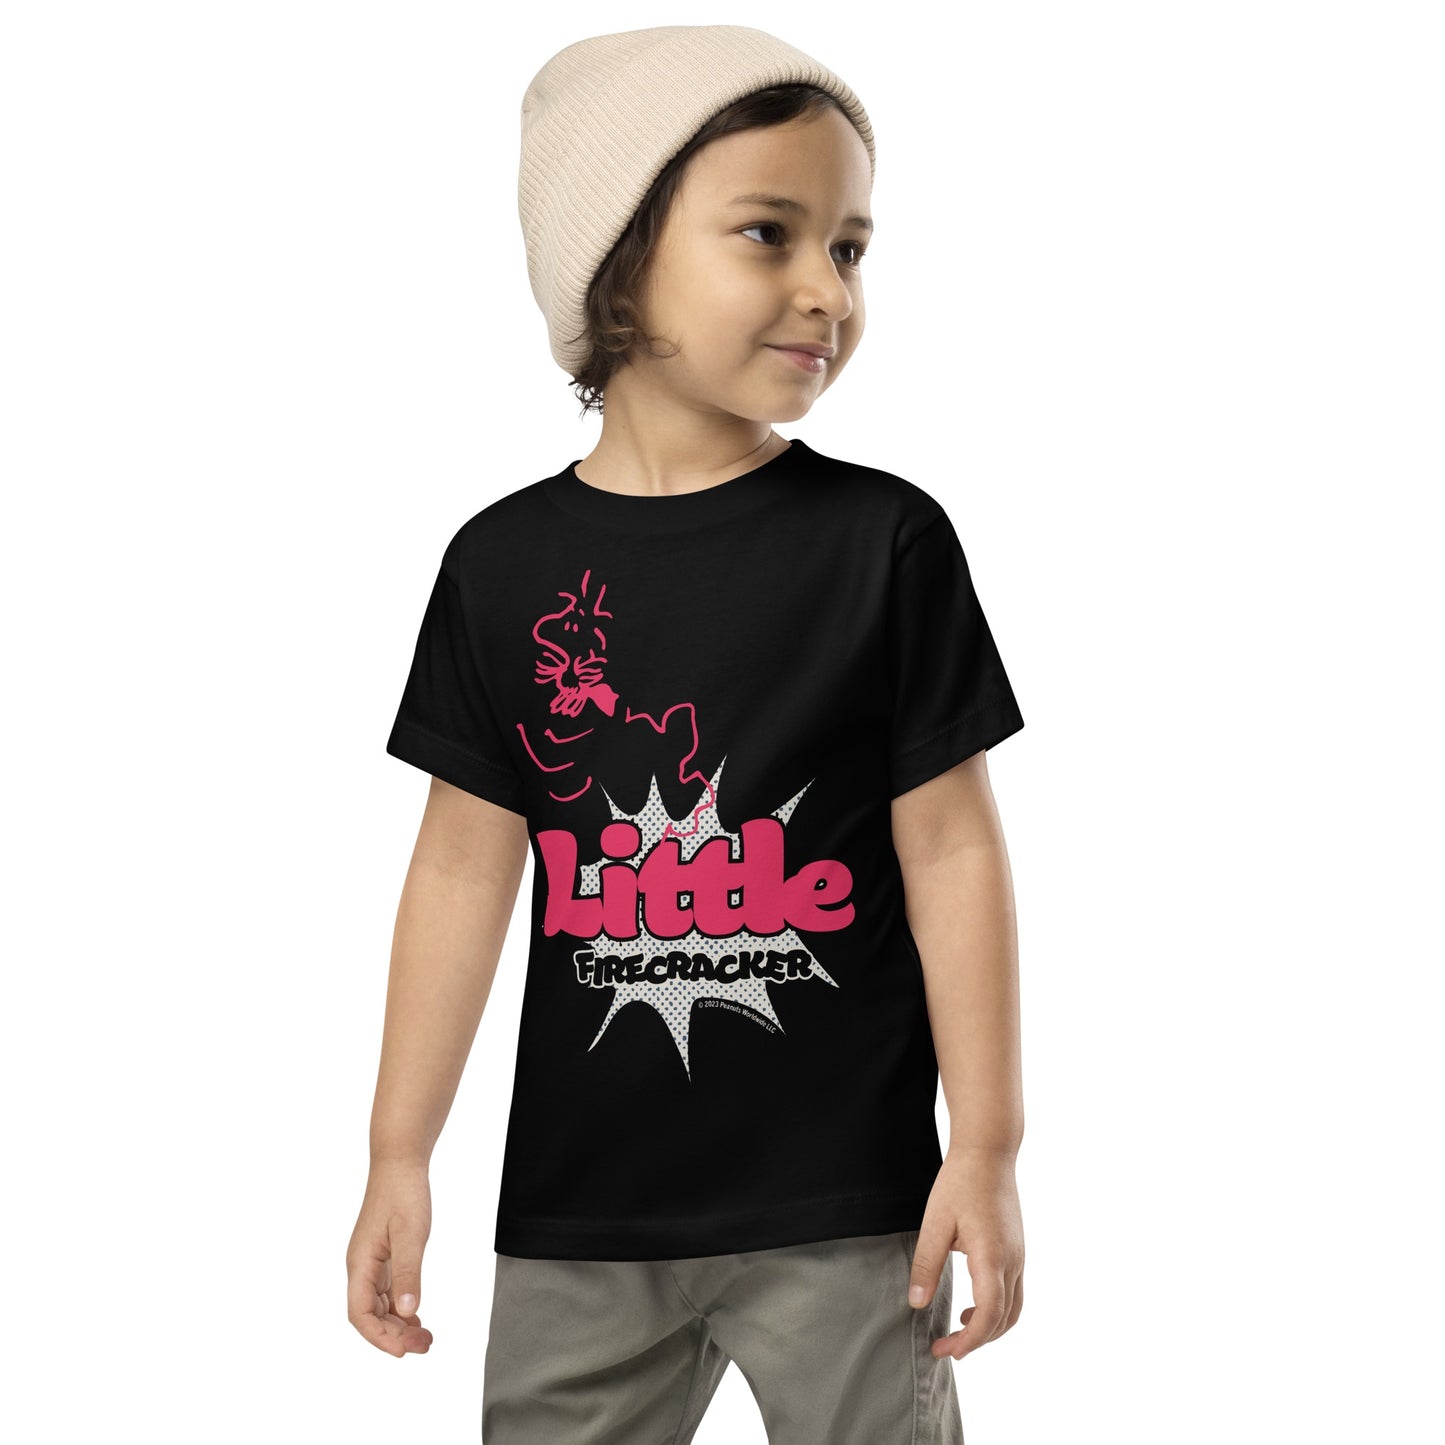 Woodstock Little Firecracker Toddler T-Shirt